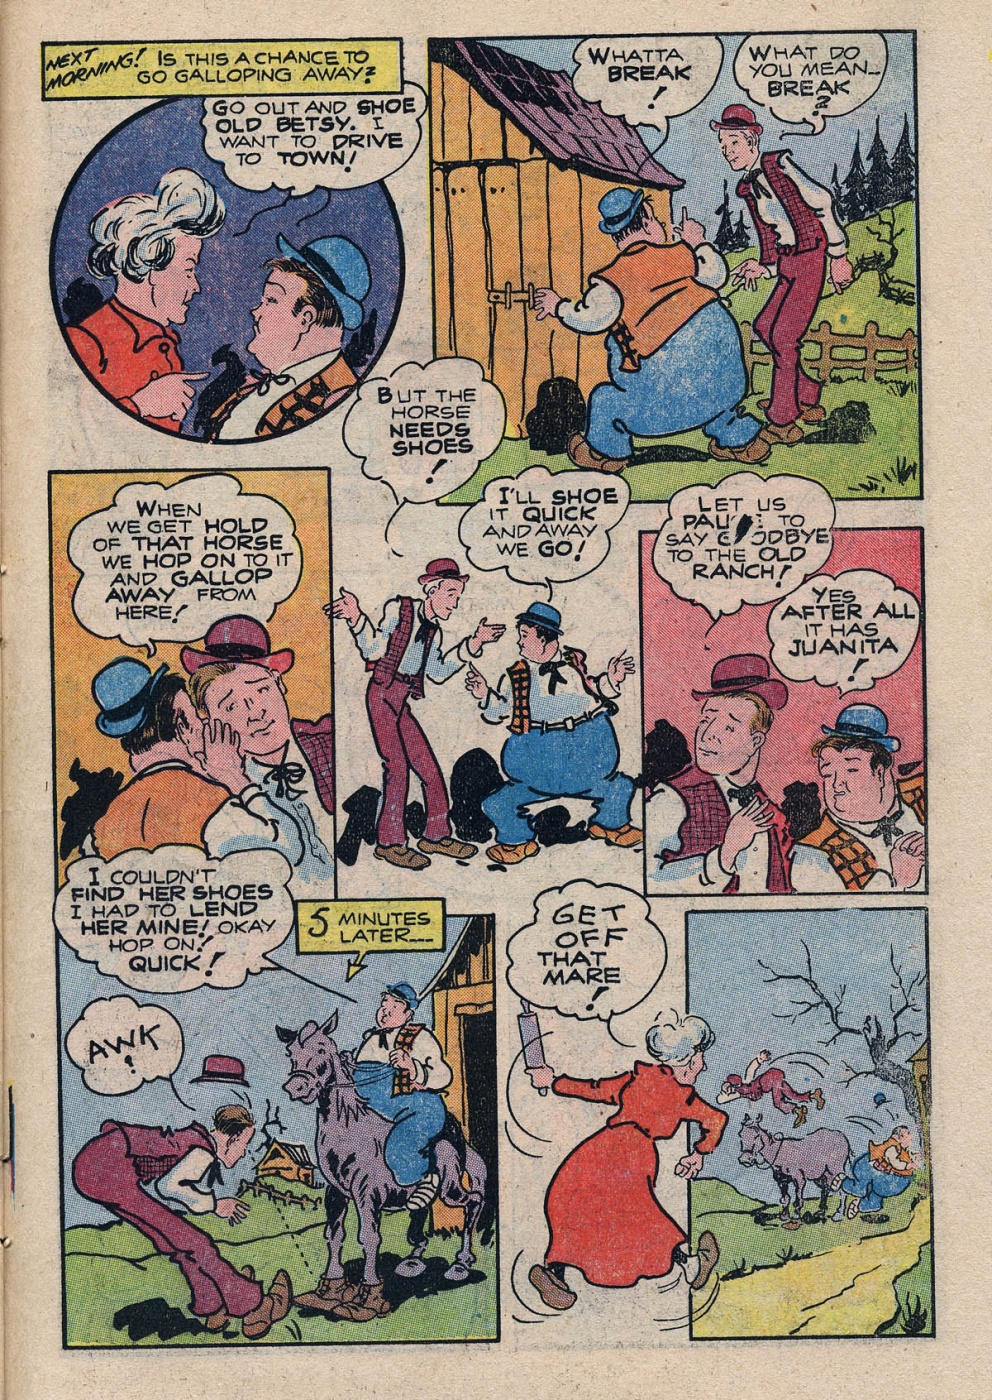 Funny Comic Strips - Abbott and Costello 001 (Feb 1948) 23